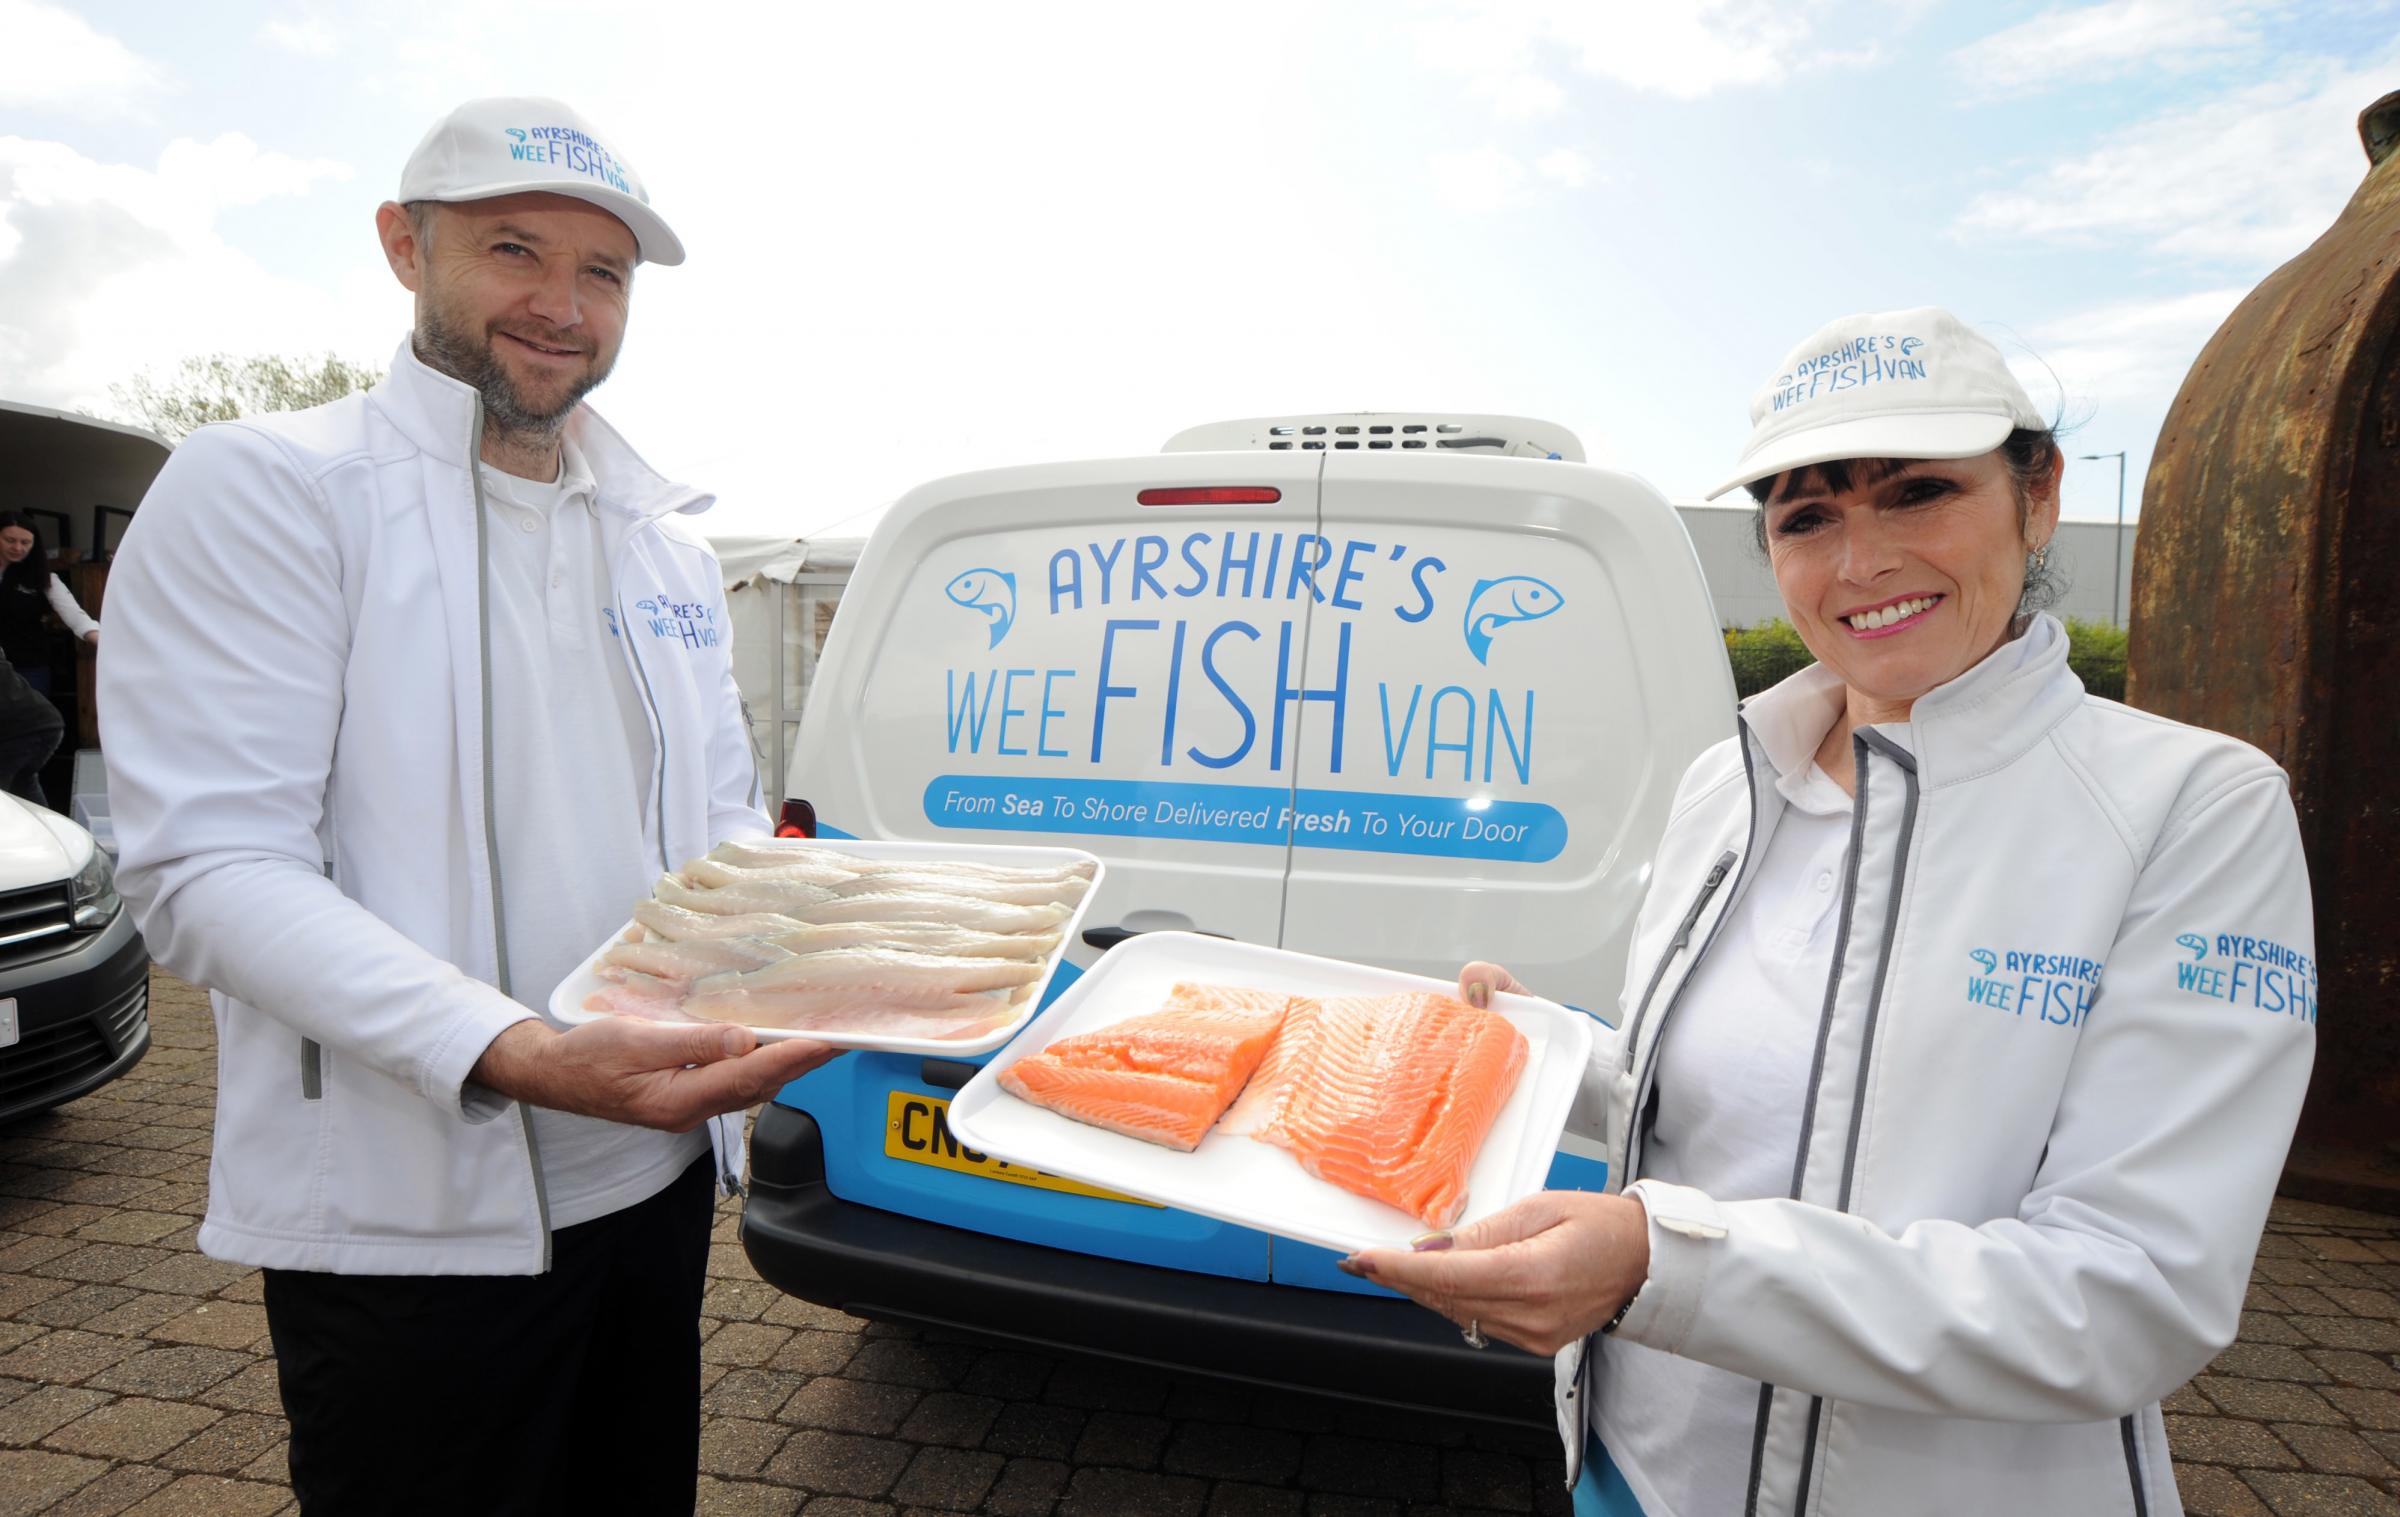 Ayrshire’s wee fish van, Douglas Mackenzie and Bernadette McQuade.